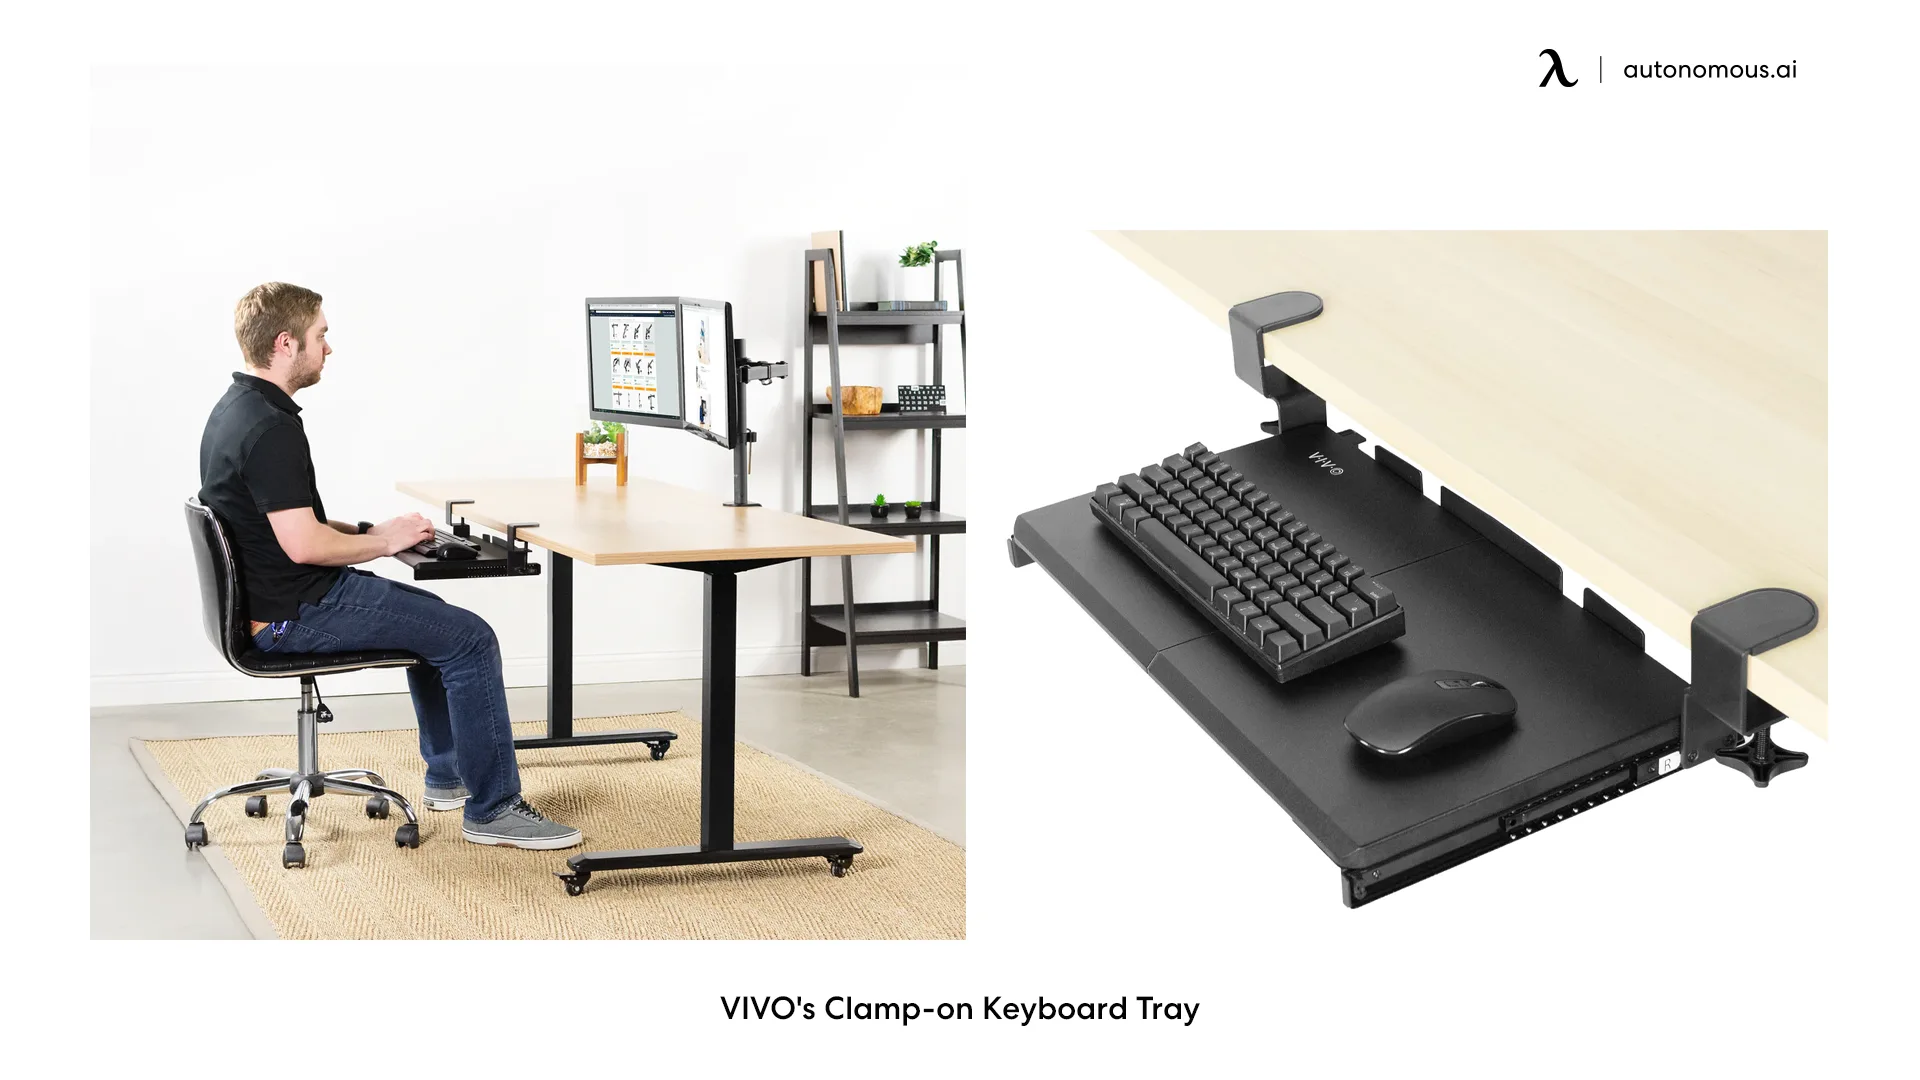 VIVO's Clamp-on Keyboard Tray